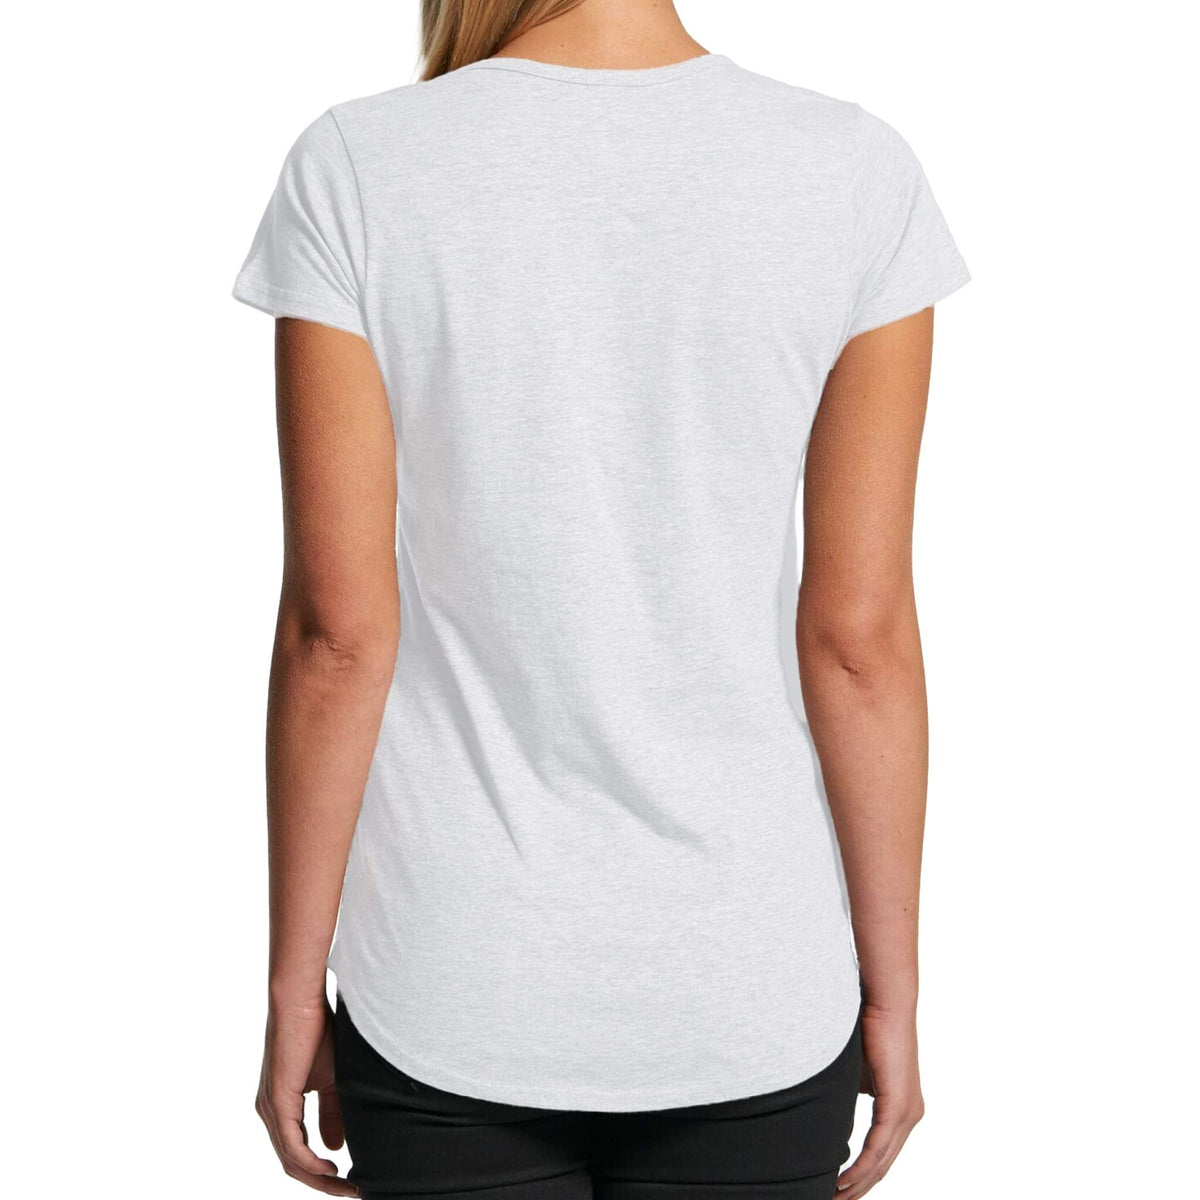 Back view of woman wearing white t shirt